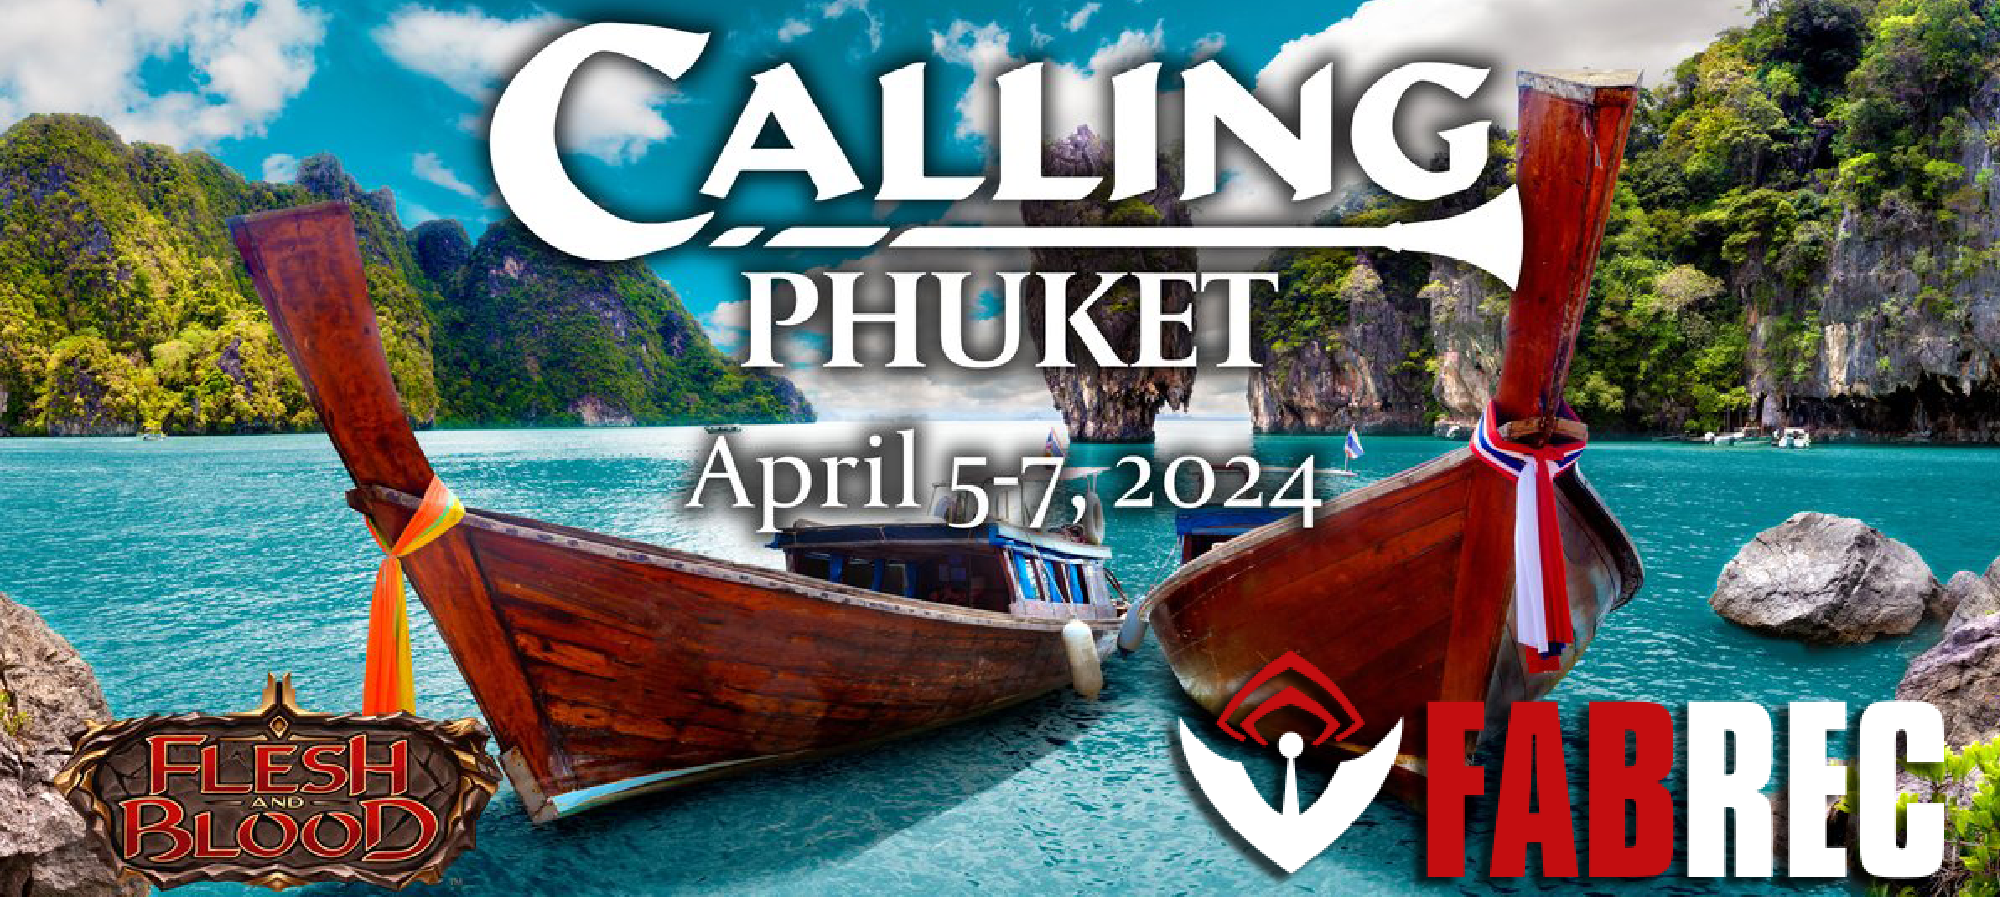 Calling: Phuket